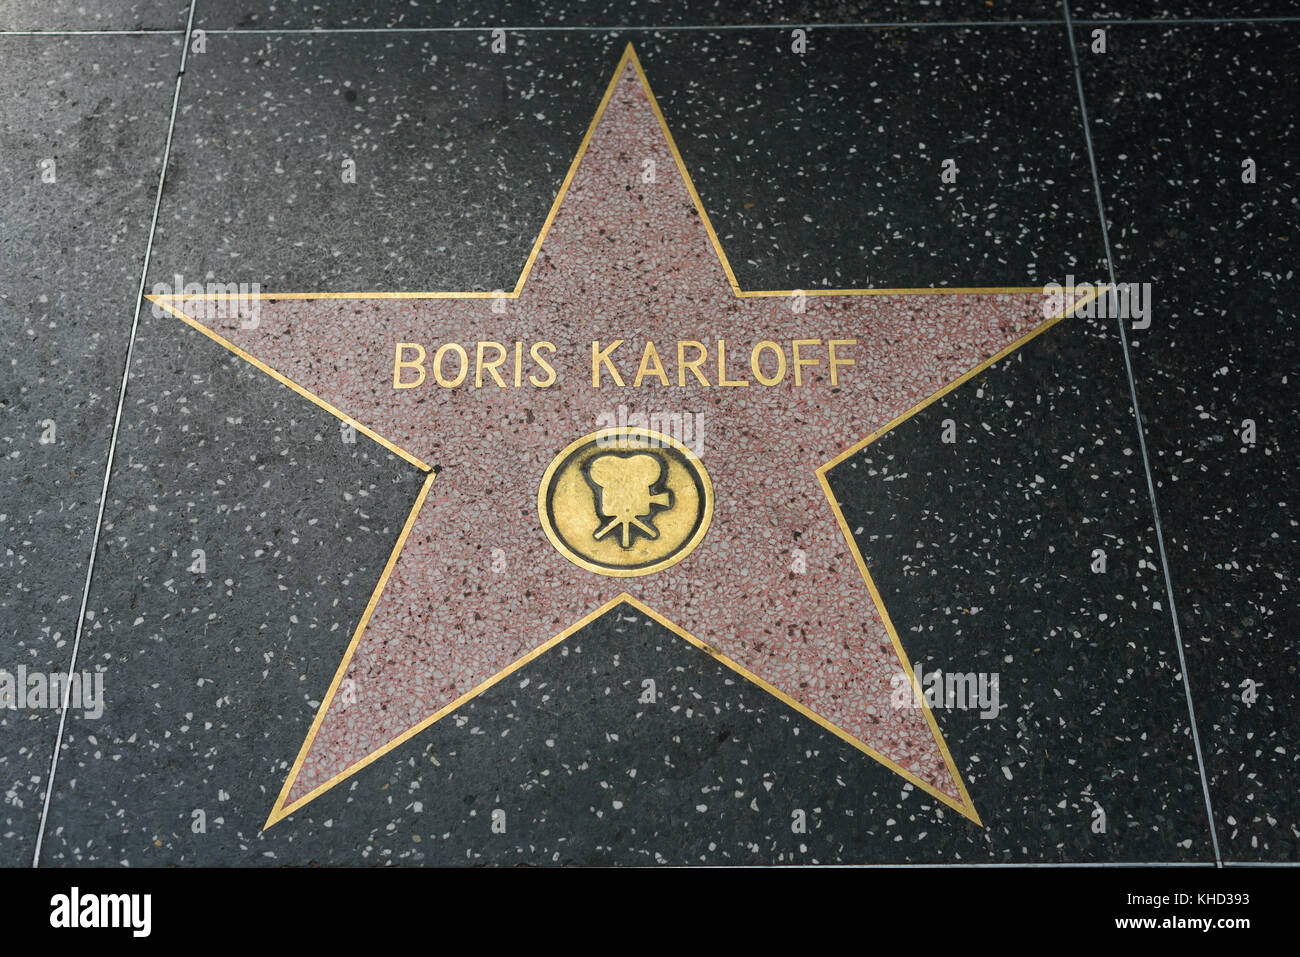 HOLLYWOOD, CA - DEZEMBER 06: Boris Karloff Star auf dem Hollywood Walk of Fame in Hollywood, Kalifornien am 6. Dezember 2016. Stockfoto